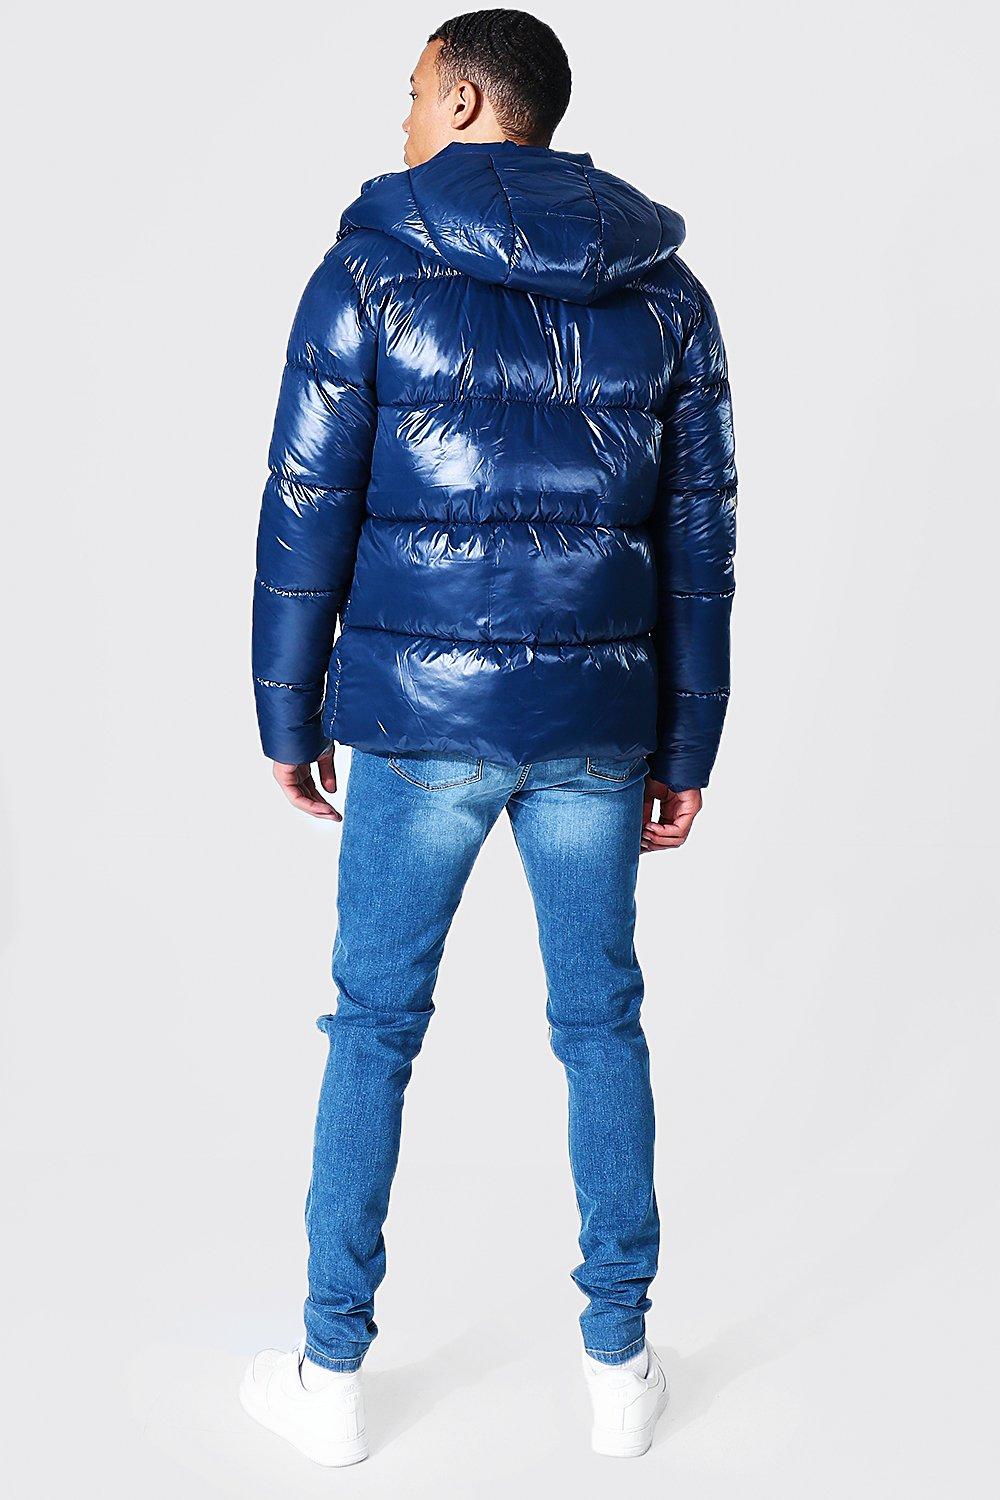 Gottliebpaludan Sneakers Sale Online, Herno high-shine puffer jacket Blau